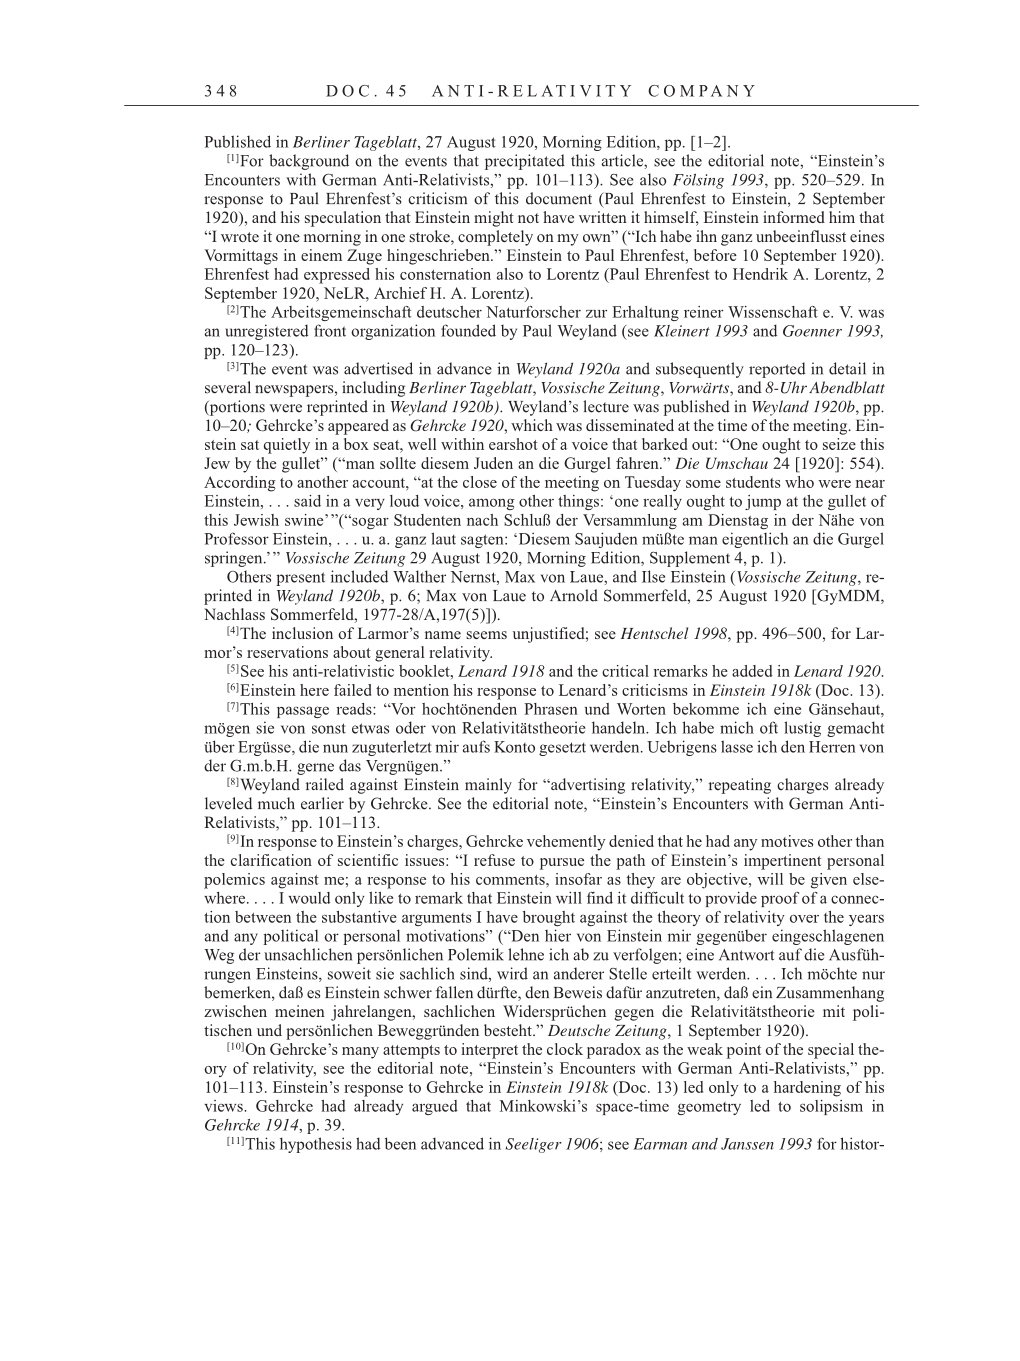 Volume 7: The Berlin Years: Writings, 1918-1921 page 348